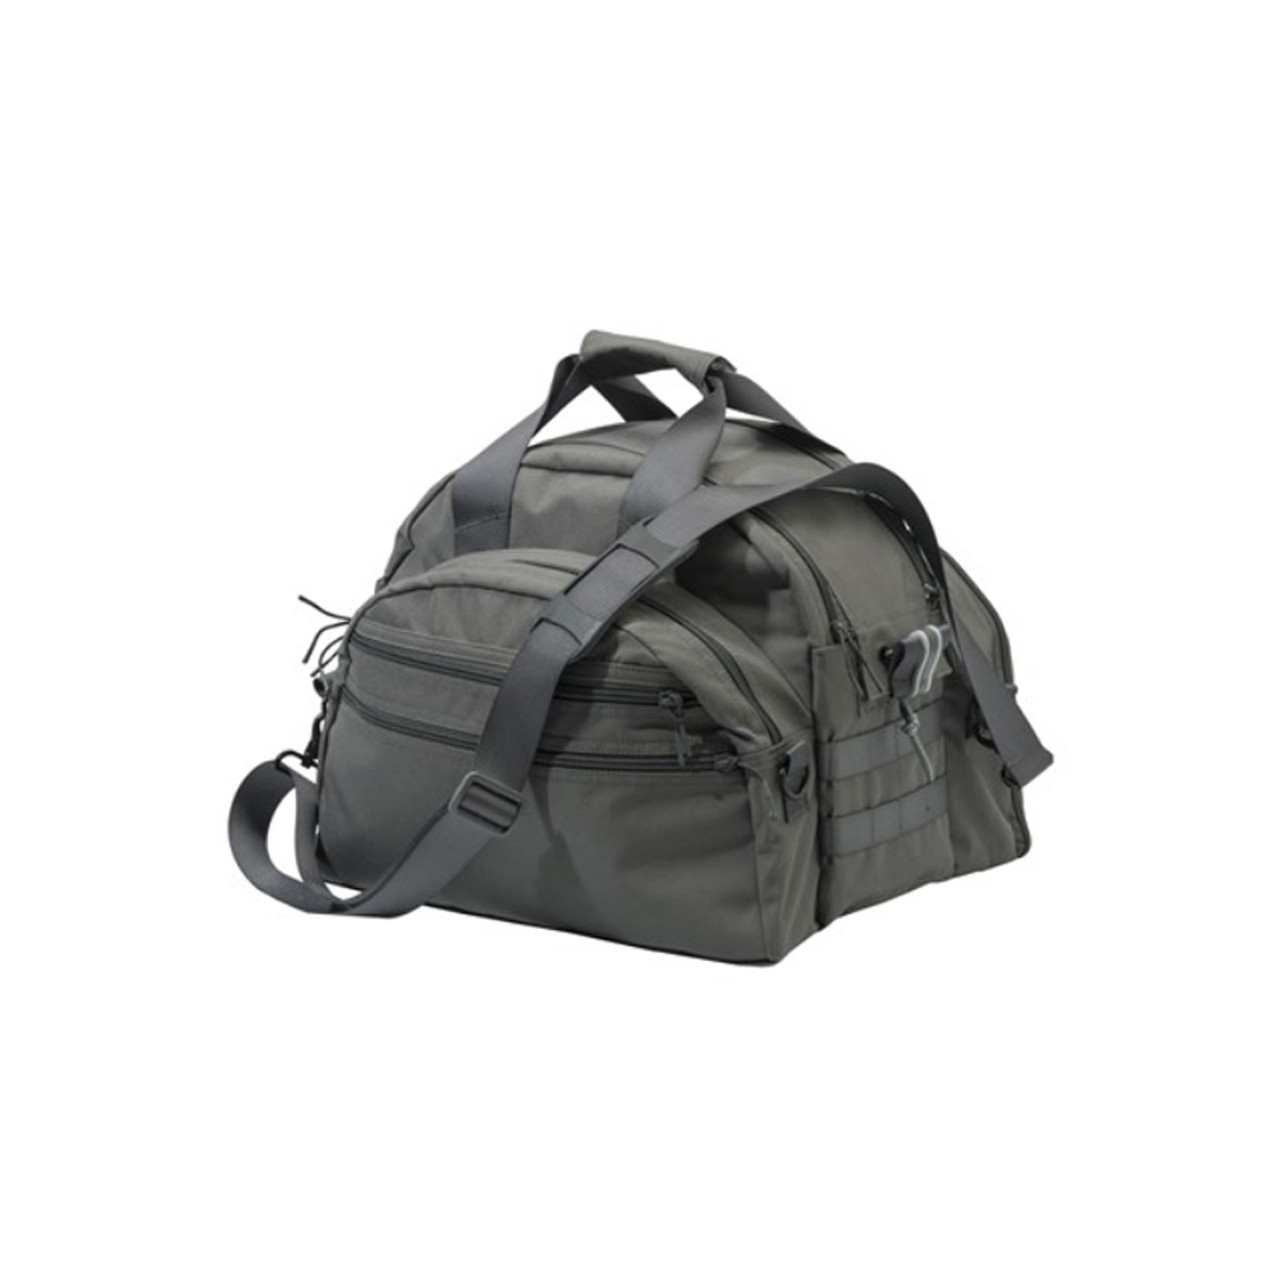 GRITR Tactical Duffle Range Bag